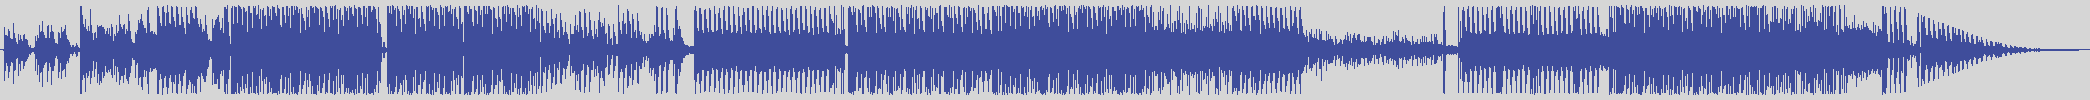 nf_boyz_records [NFY041] Nch - Sendert [Original Mix] audio wave form